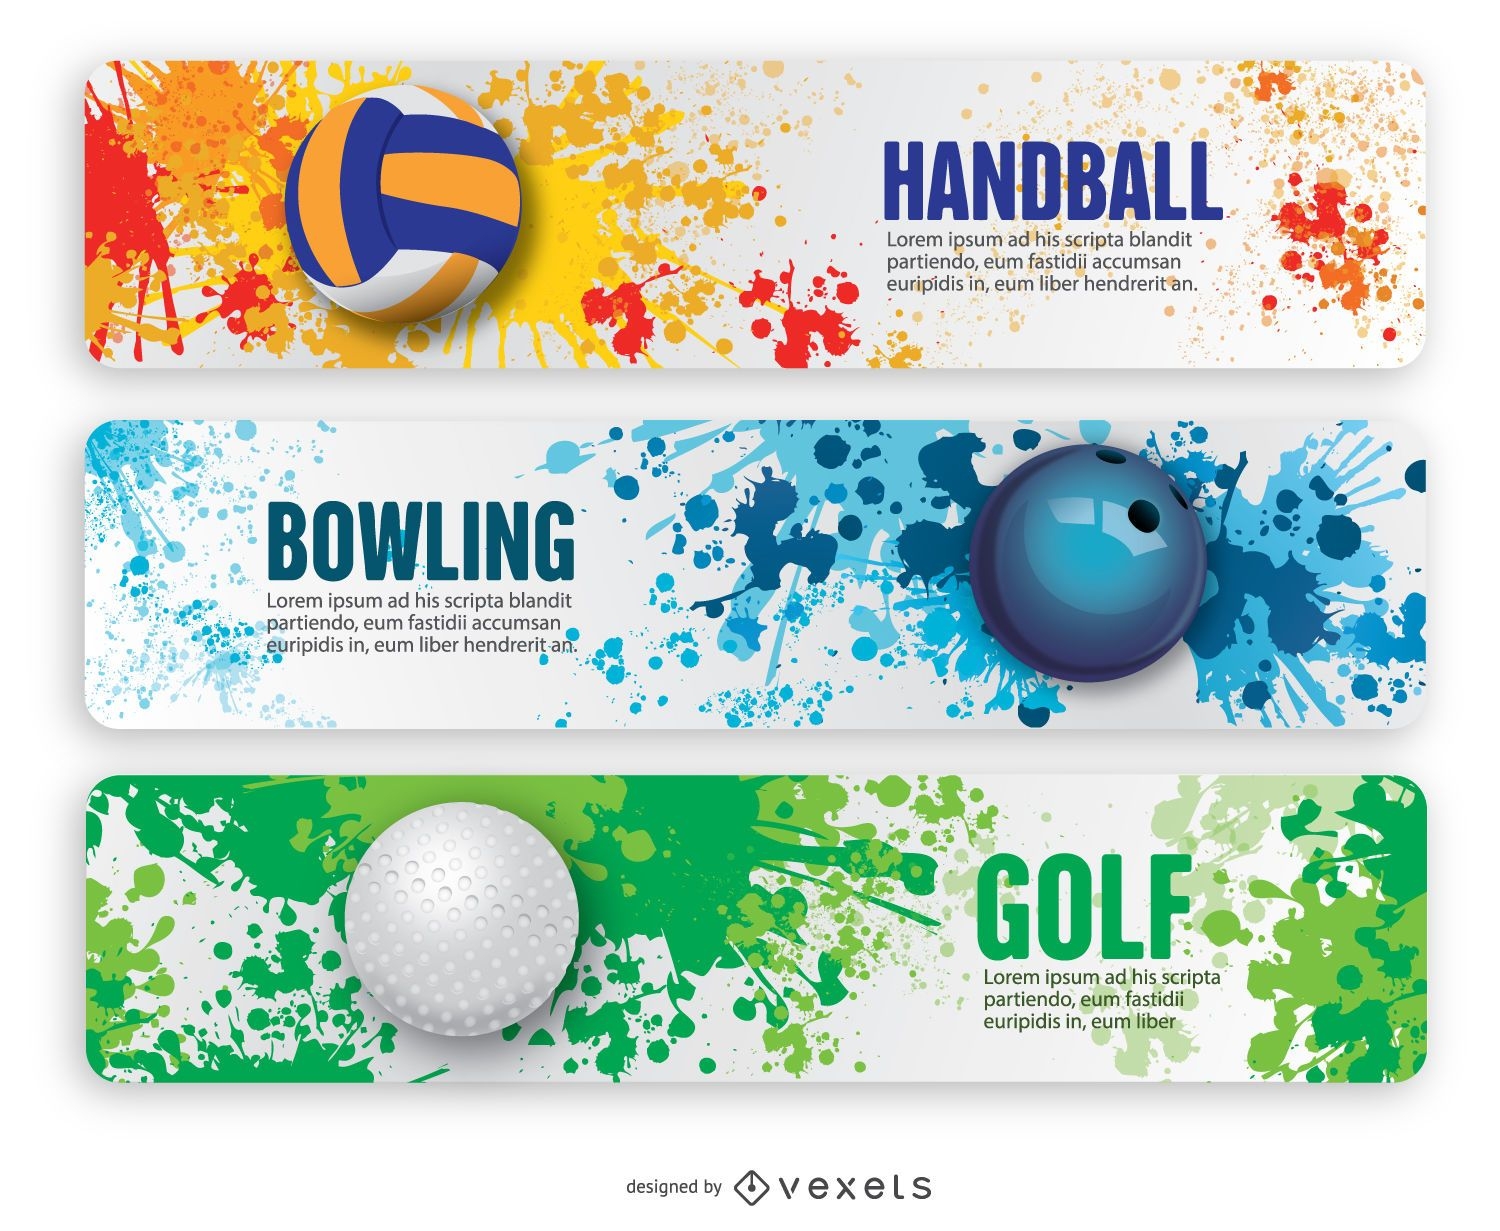 Handball Bowling and Golf Banners